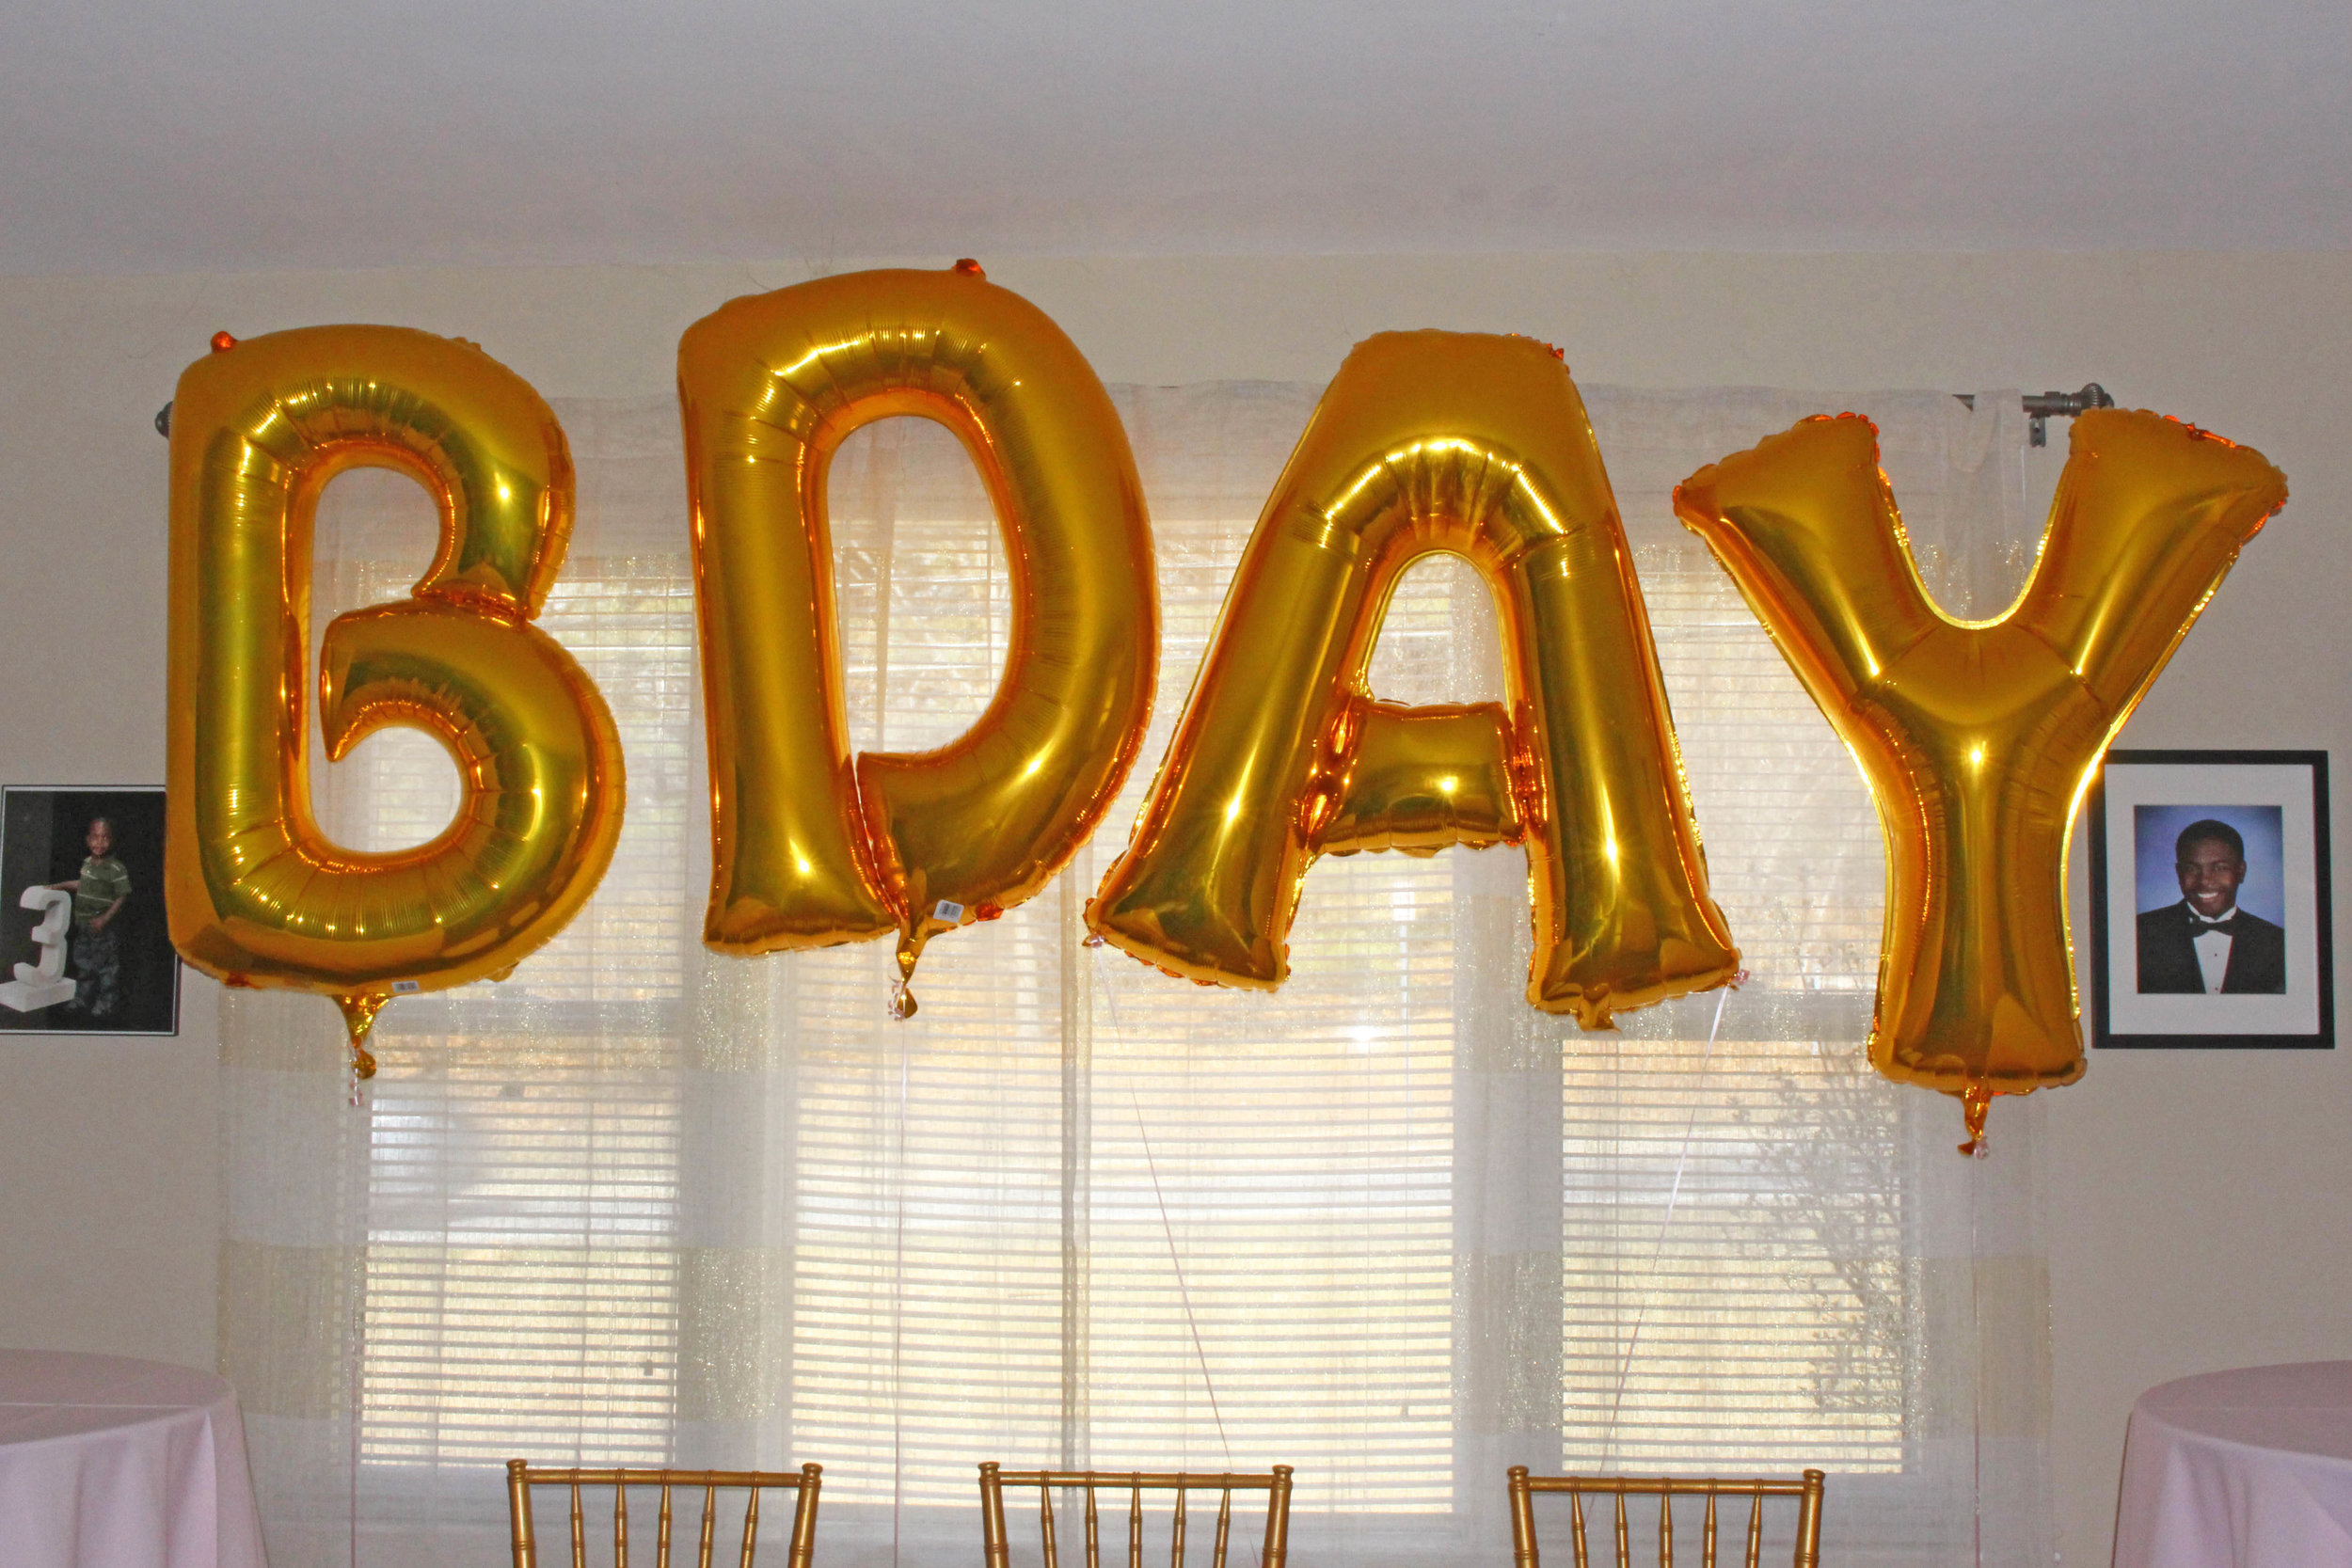  large latex "bday" balloons for first birthday | Pish Posh Perfect 